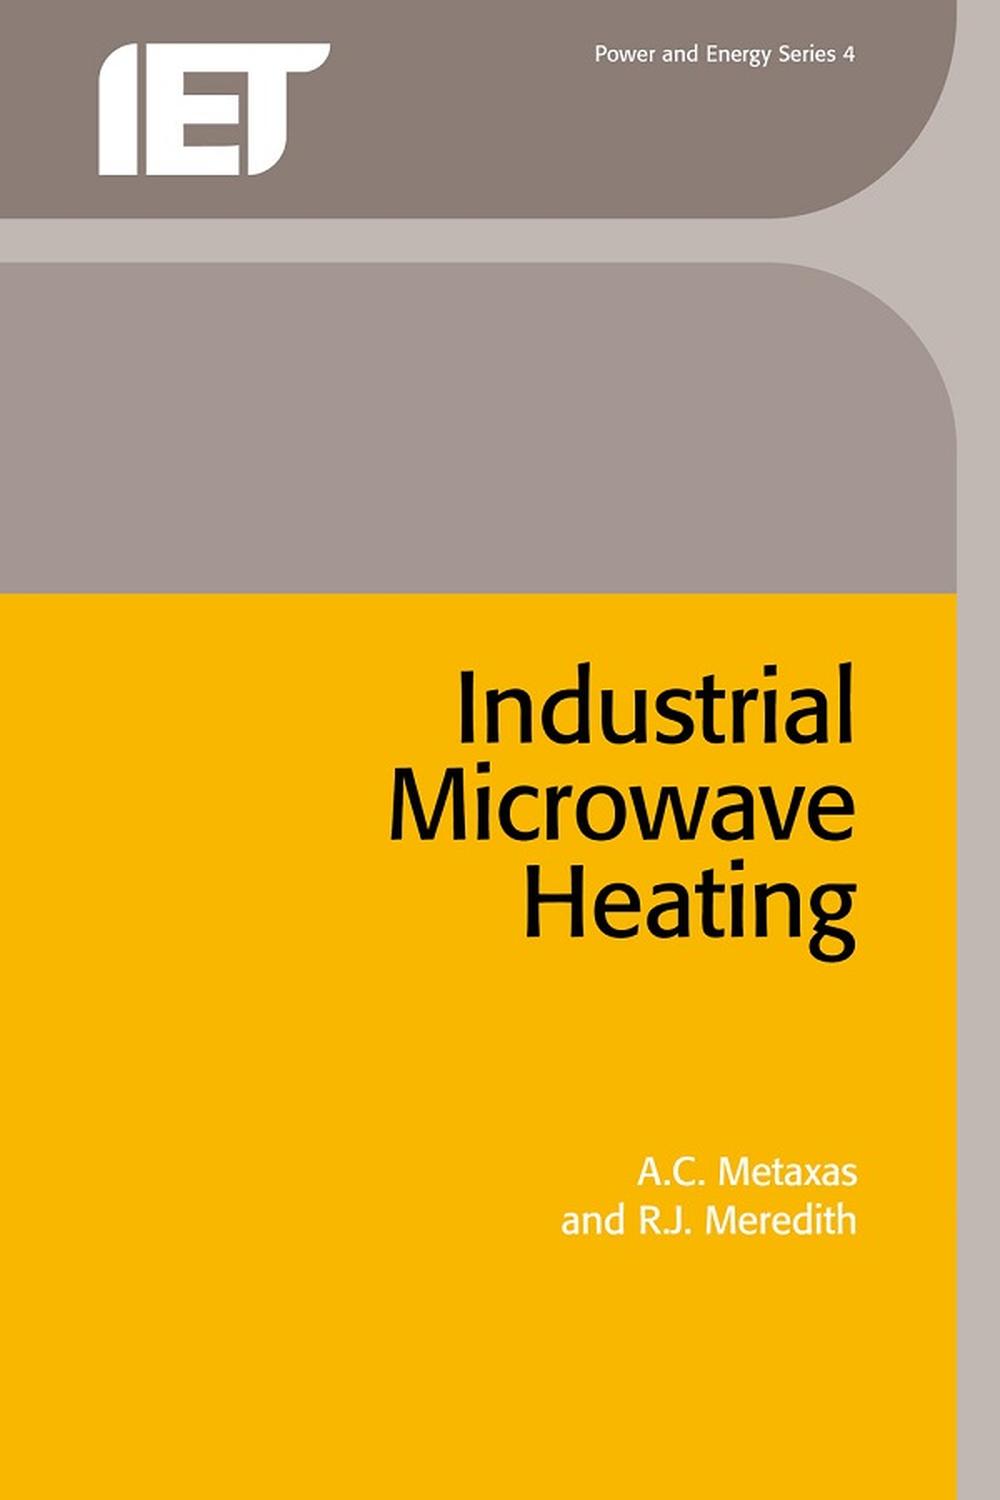 Industrial Microwave Heating - A.C. Metaxas, R.J. Meredith